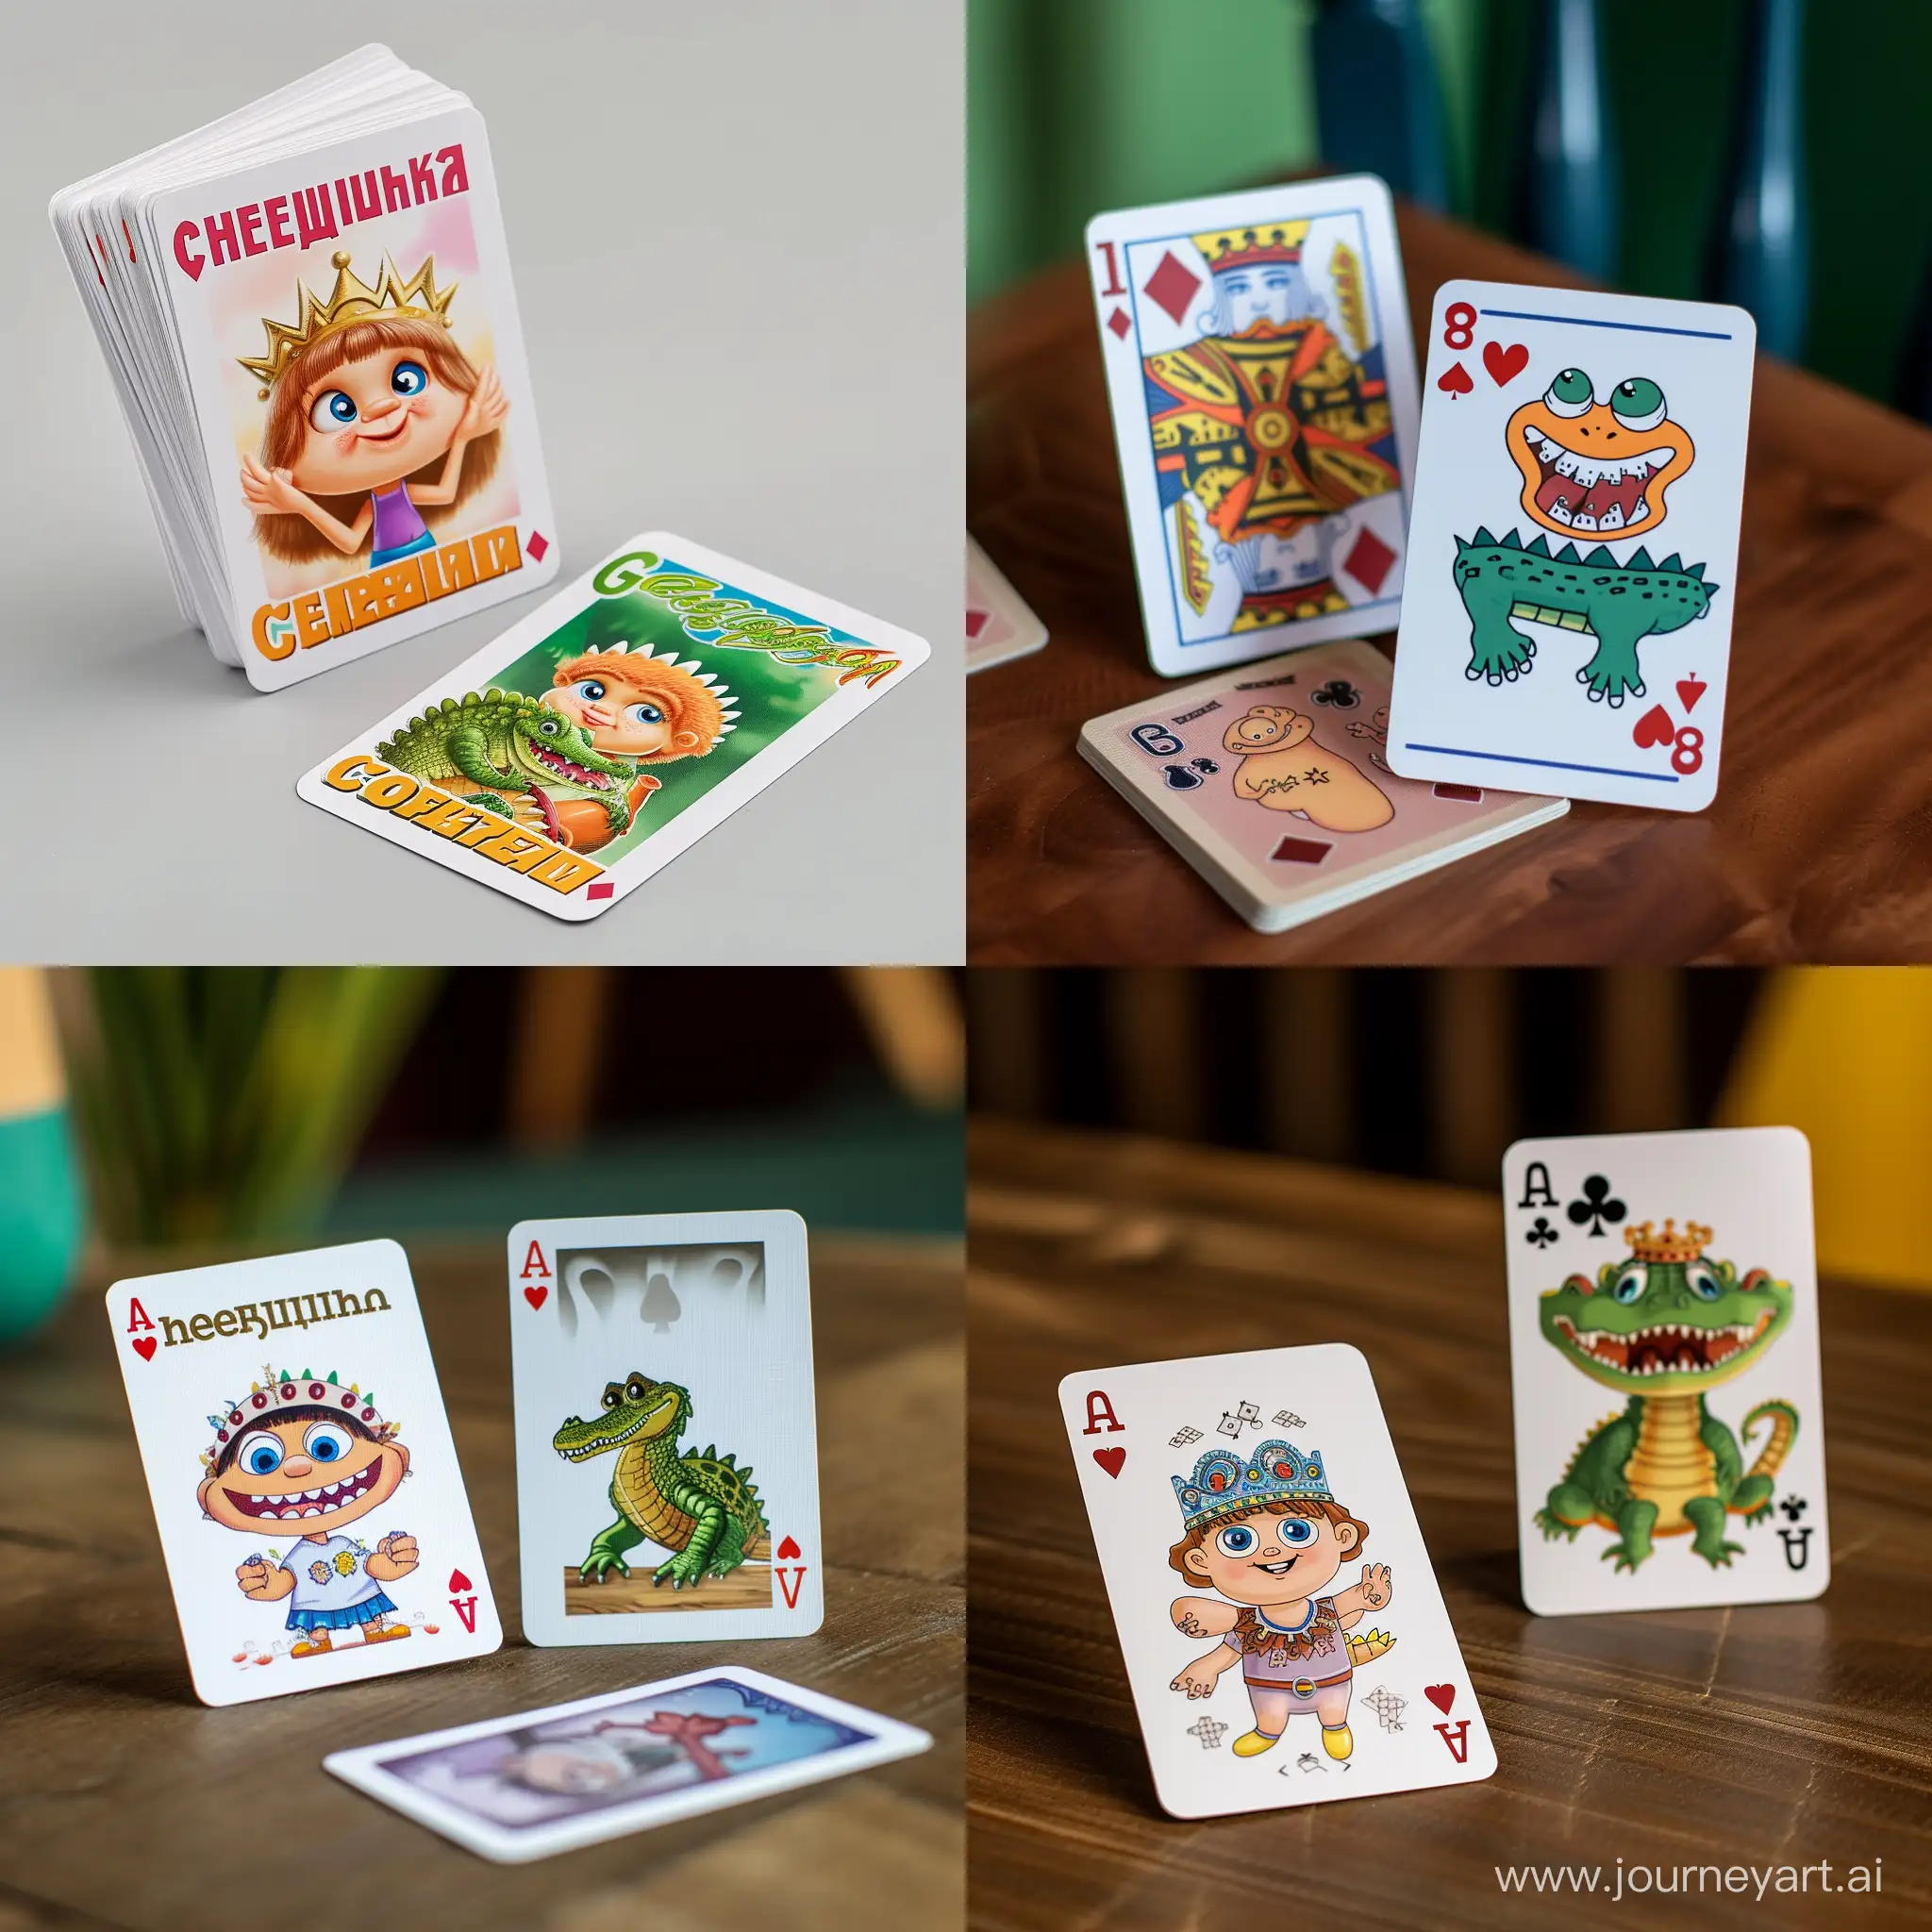 Cheburashka-and-Crocodile-Gena-Enjoying-a-Friendly-Card-Game